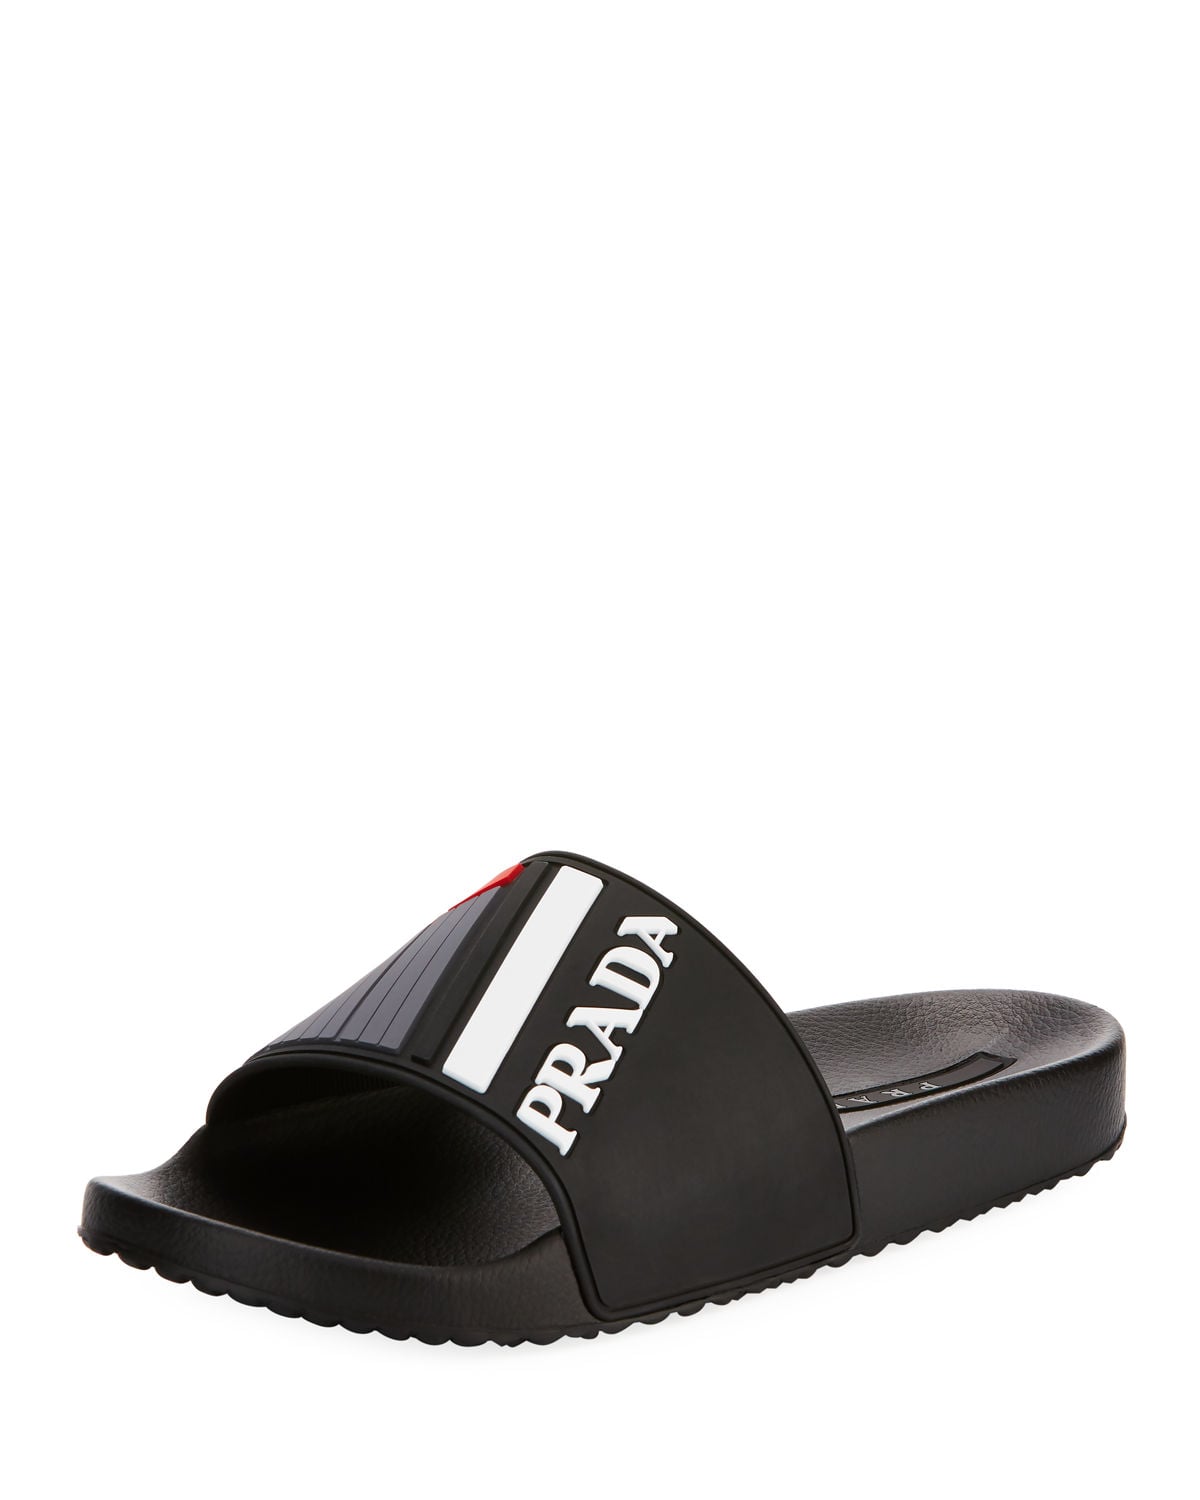 Prada Men's Logo Rubber Slide Sandal | 28 Gifts the Man You Love Will Love  | POPSUGAR Fashion Photo 26